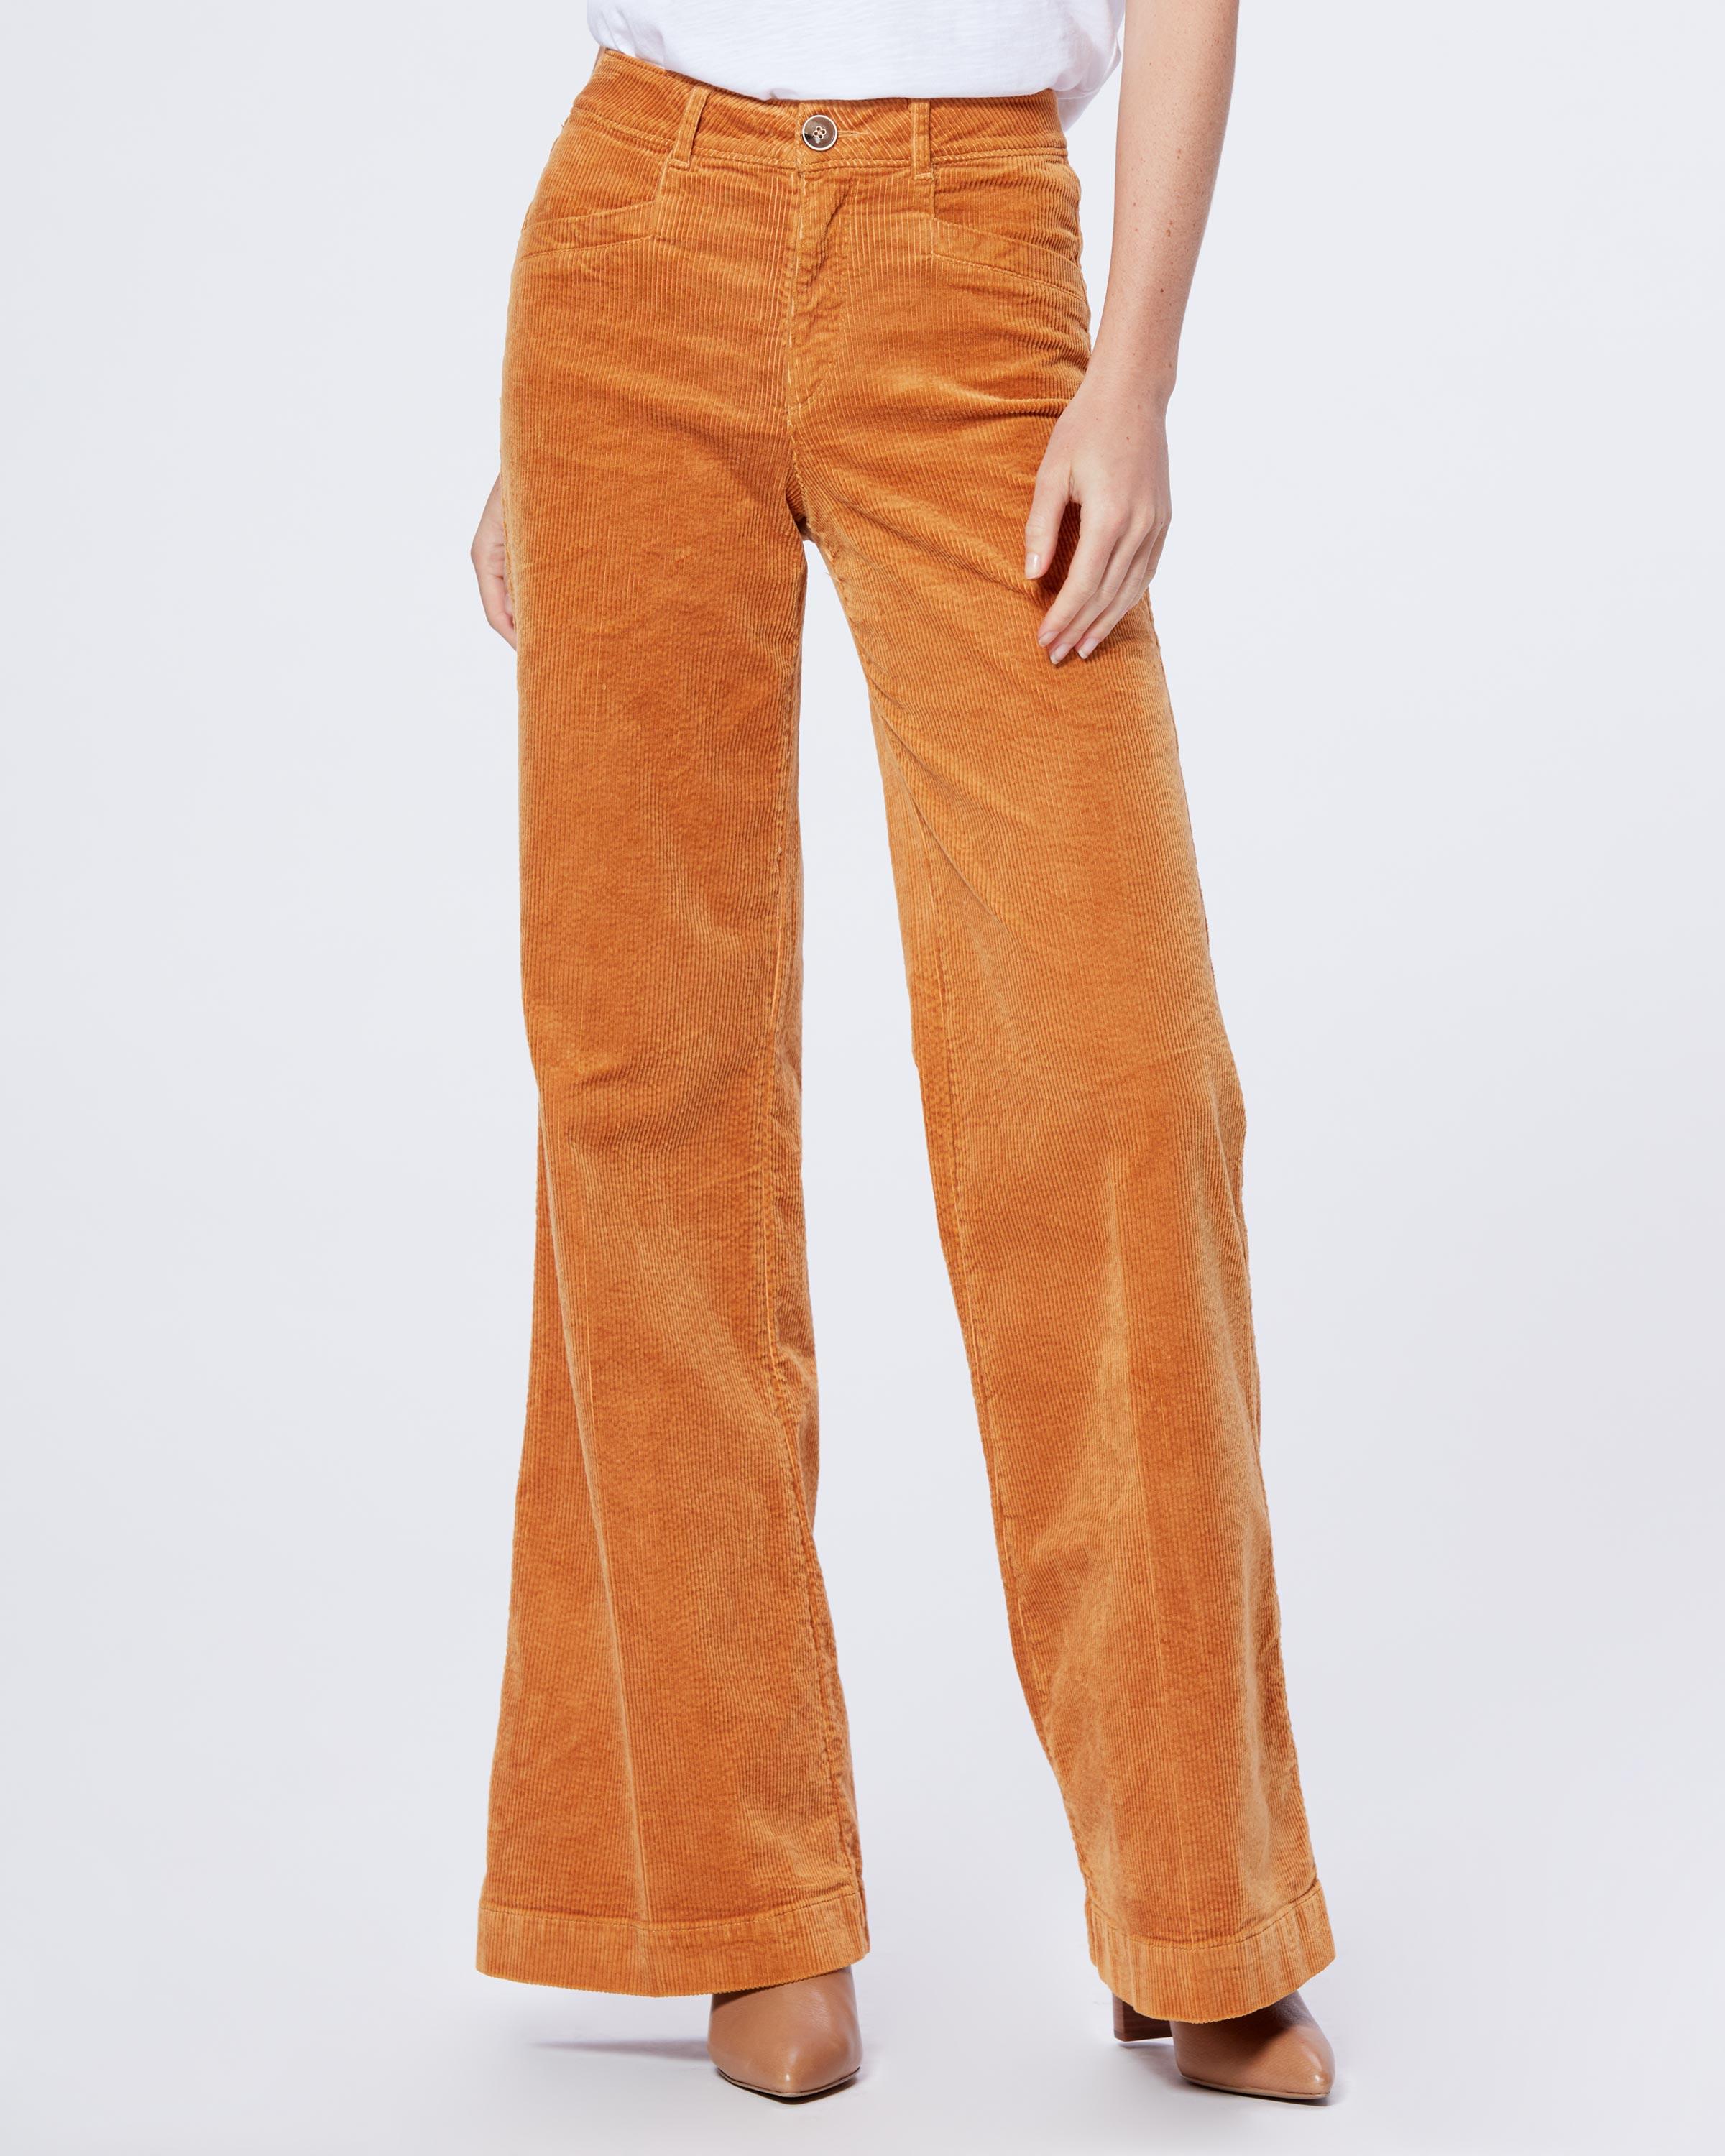 PAIGE Sutton Wide Leg Corduroy Pants in Marigold (Orange) - Save 40% - Lyst